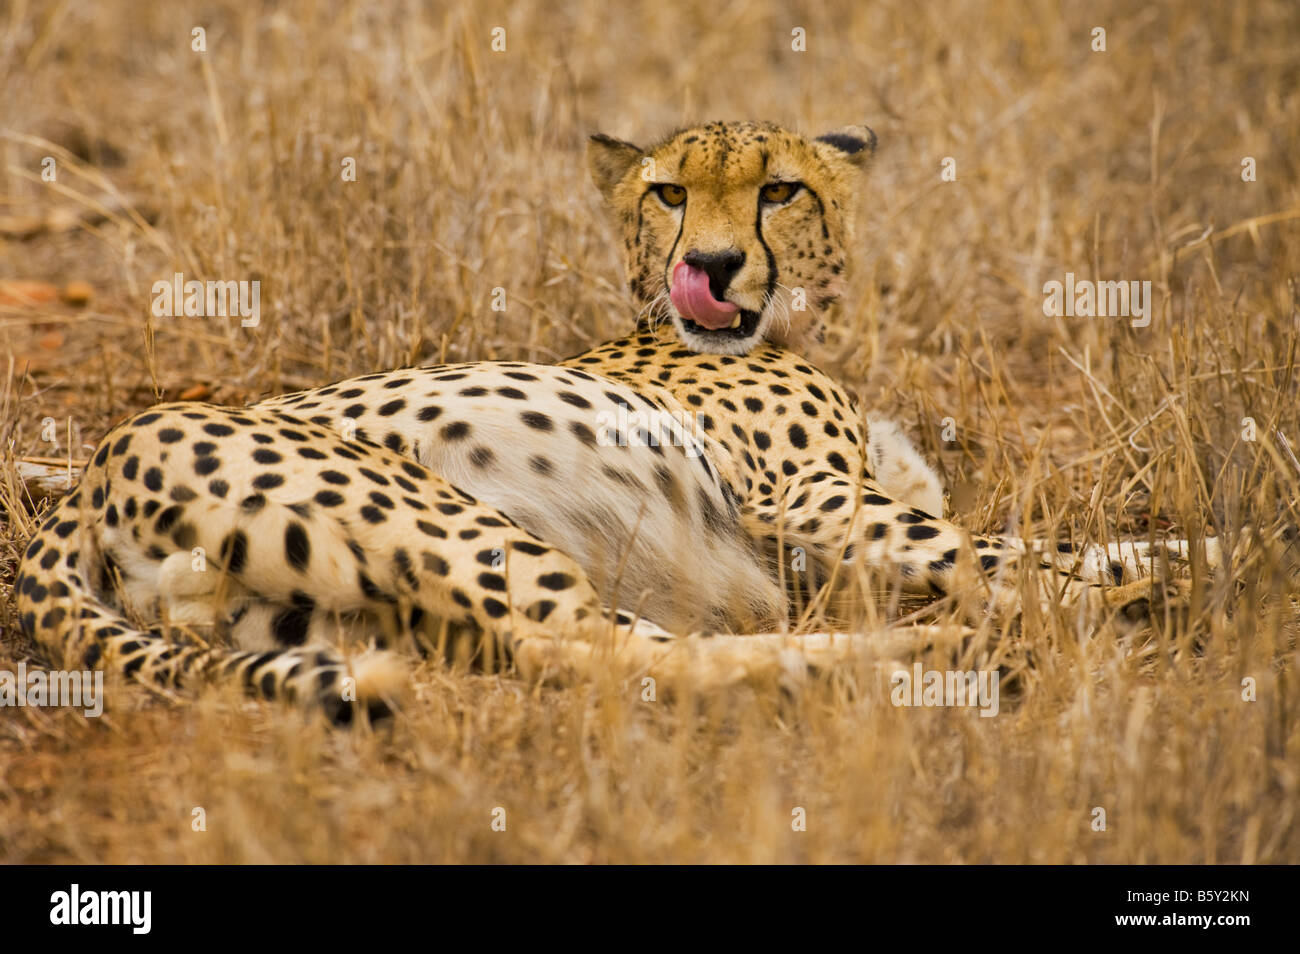 WILDLIFE wild cheetah gepard Acinonyx jubatus in ambience prey southafrica south-afrika wilderness south africa Stock Photo